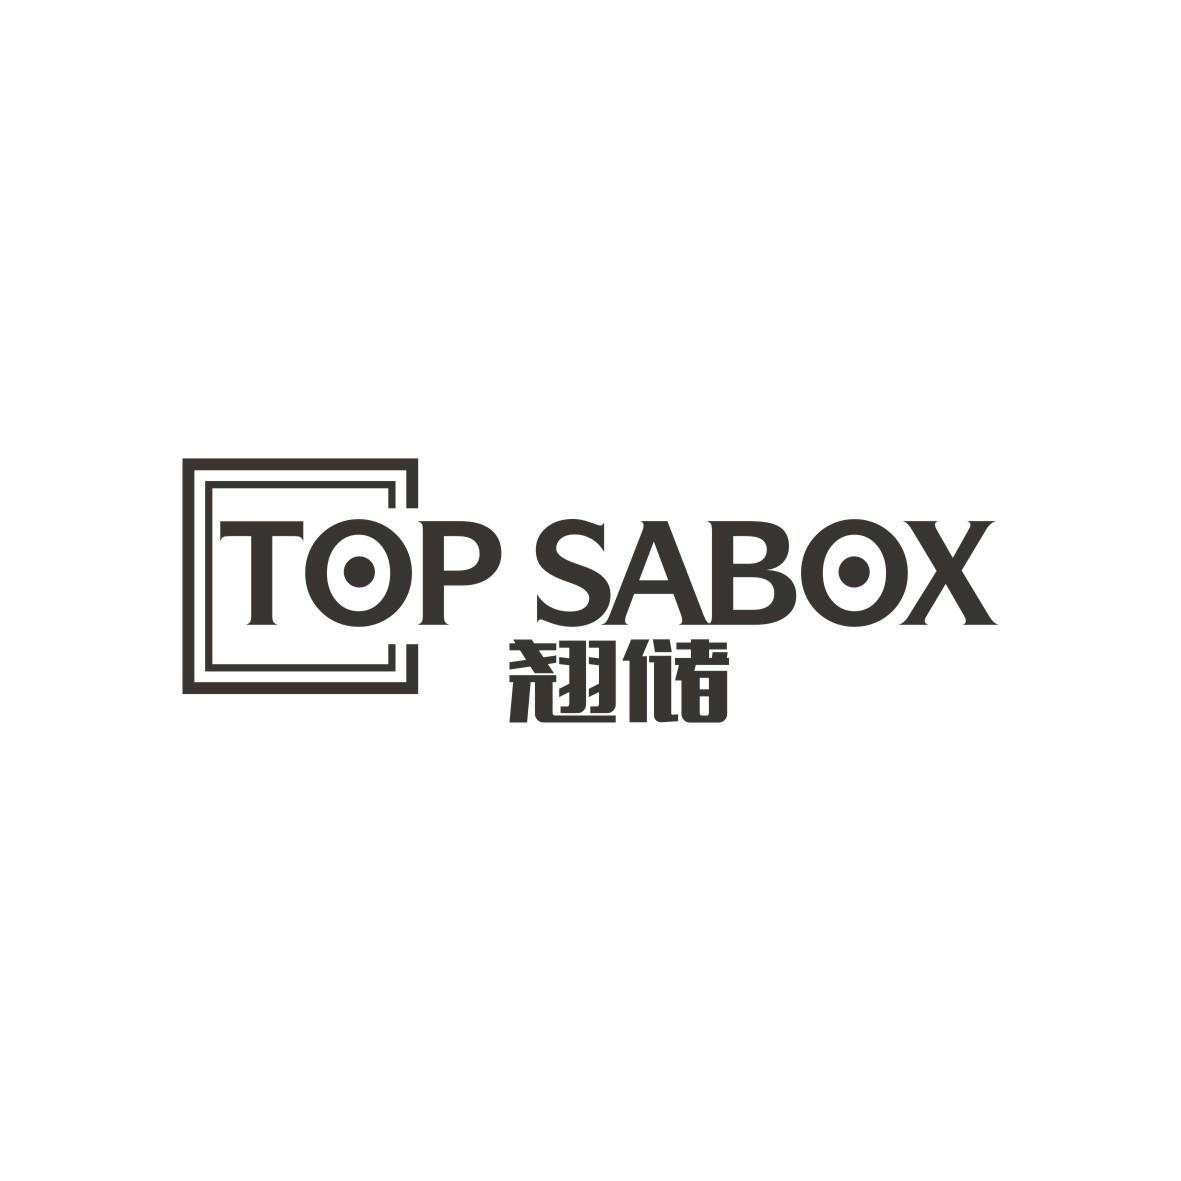 翘储 TOP SABOX